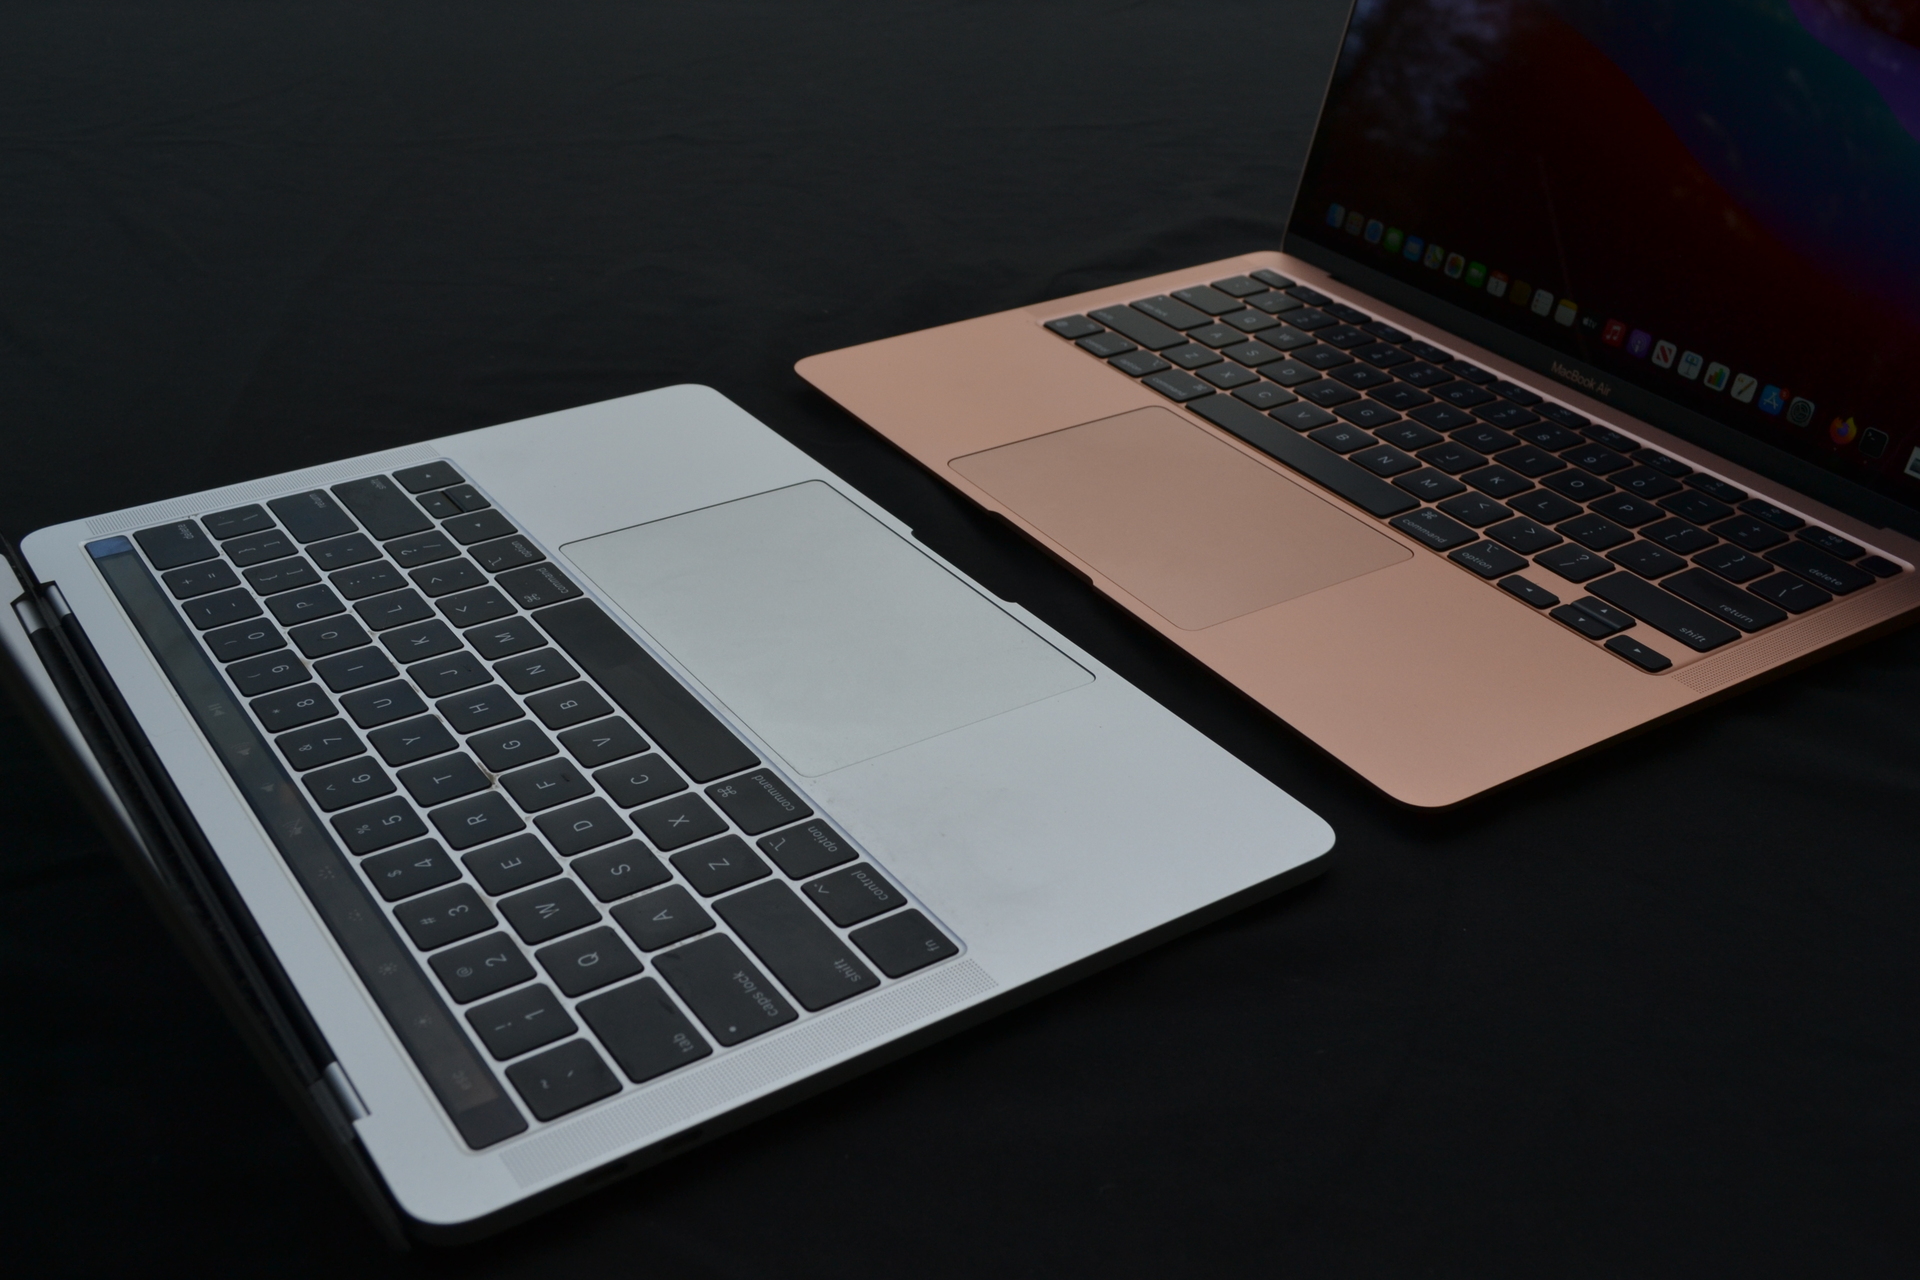 MacBook Air M1 Gold Review - Developer Coach